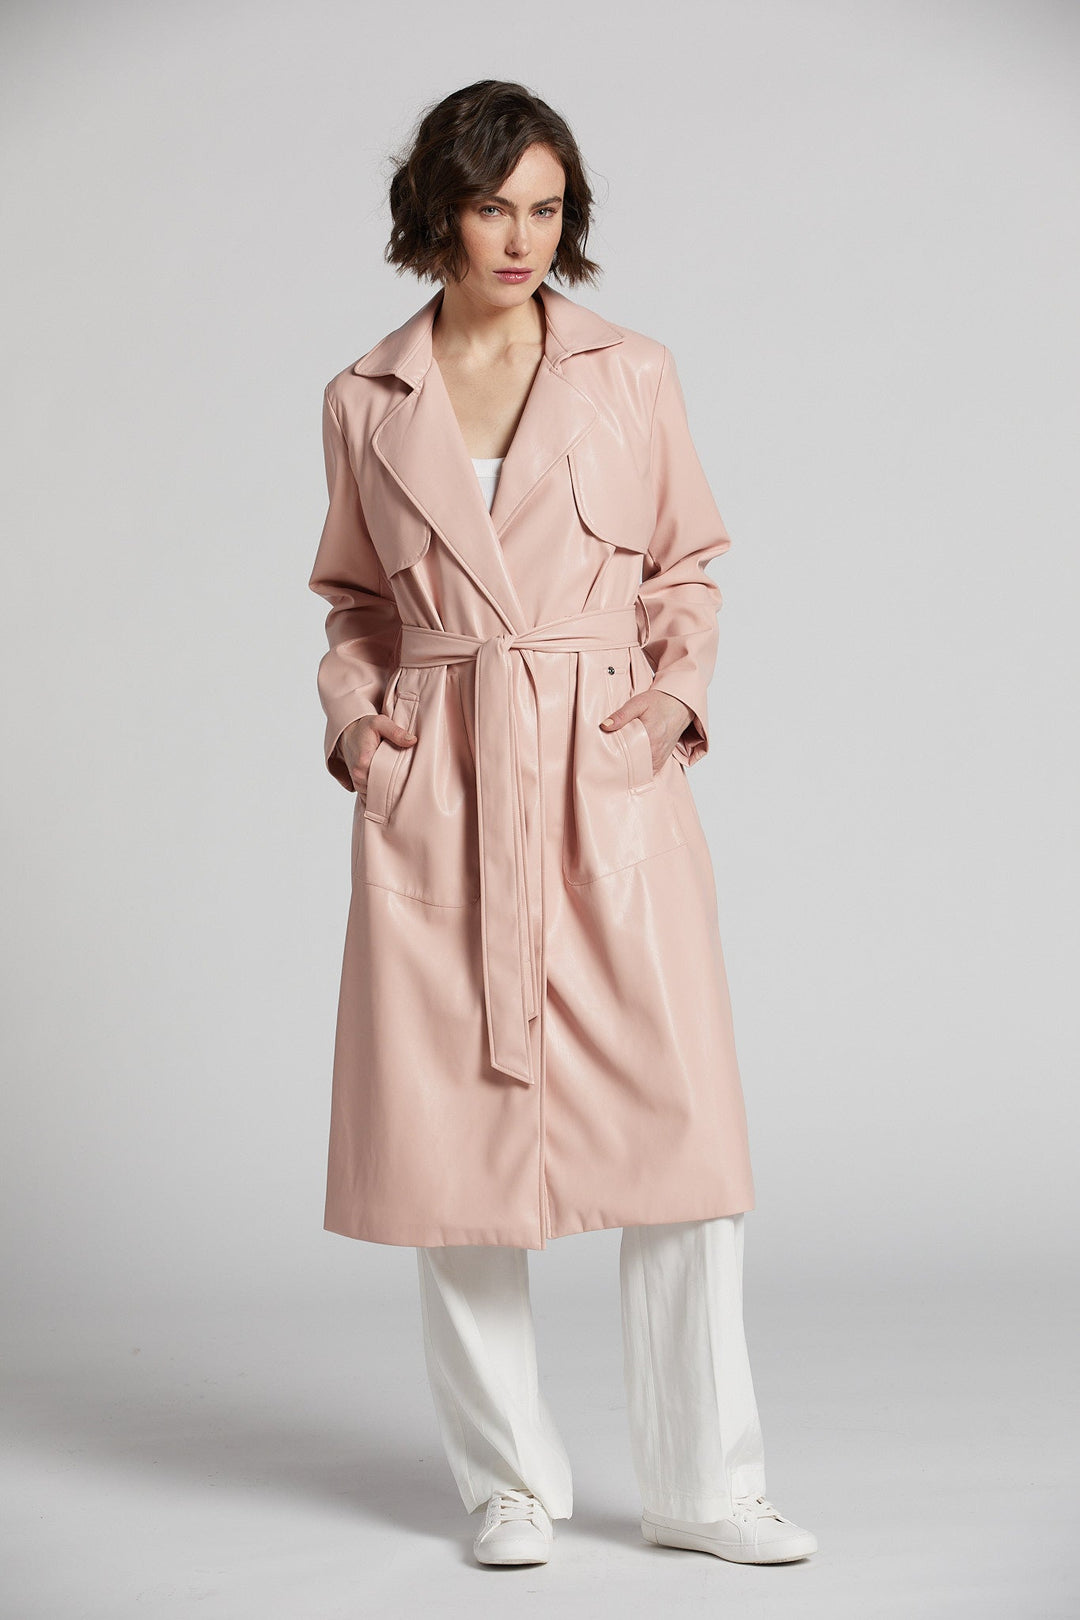 Adroit Atelier Nina Faux Leather Wrap Coat in Blush